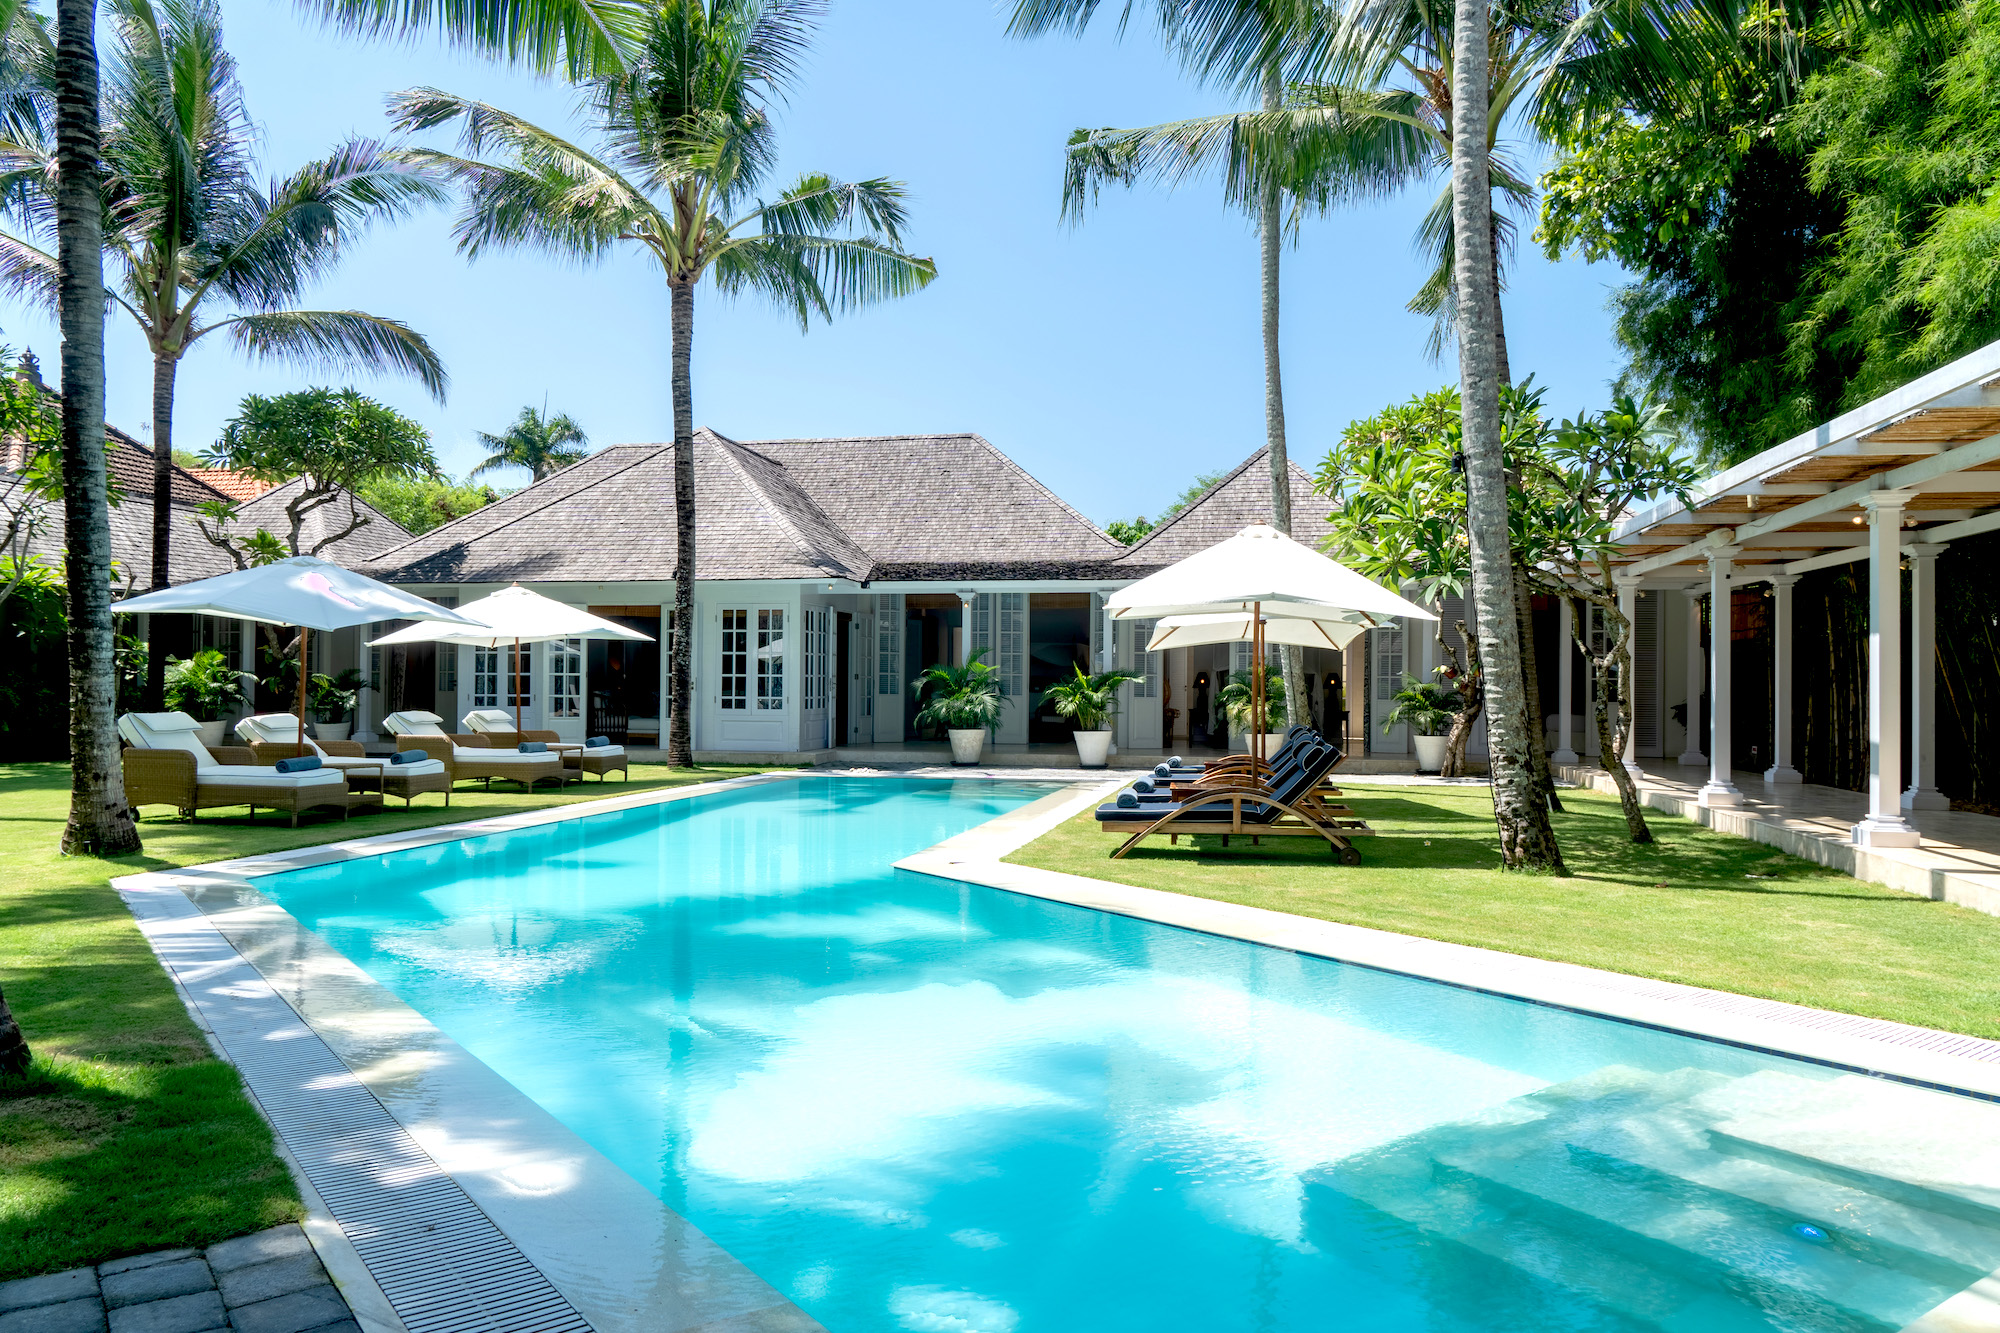 Tour Bali’s Best Villas Without Leaving Home